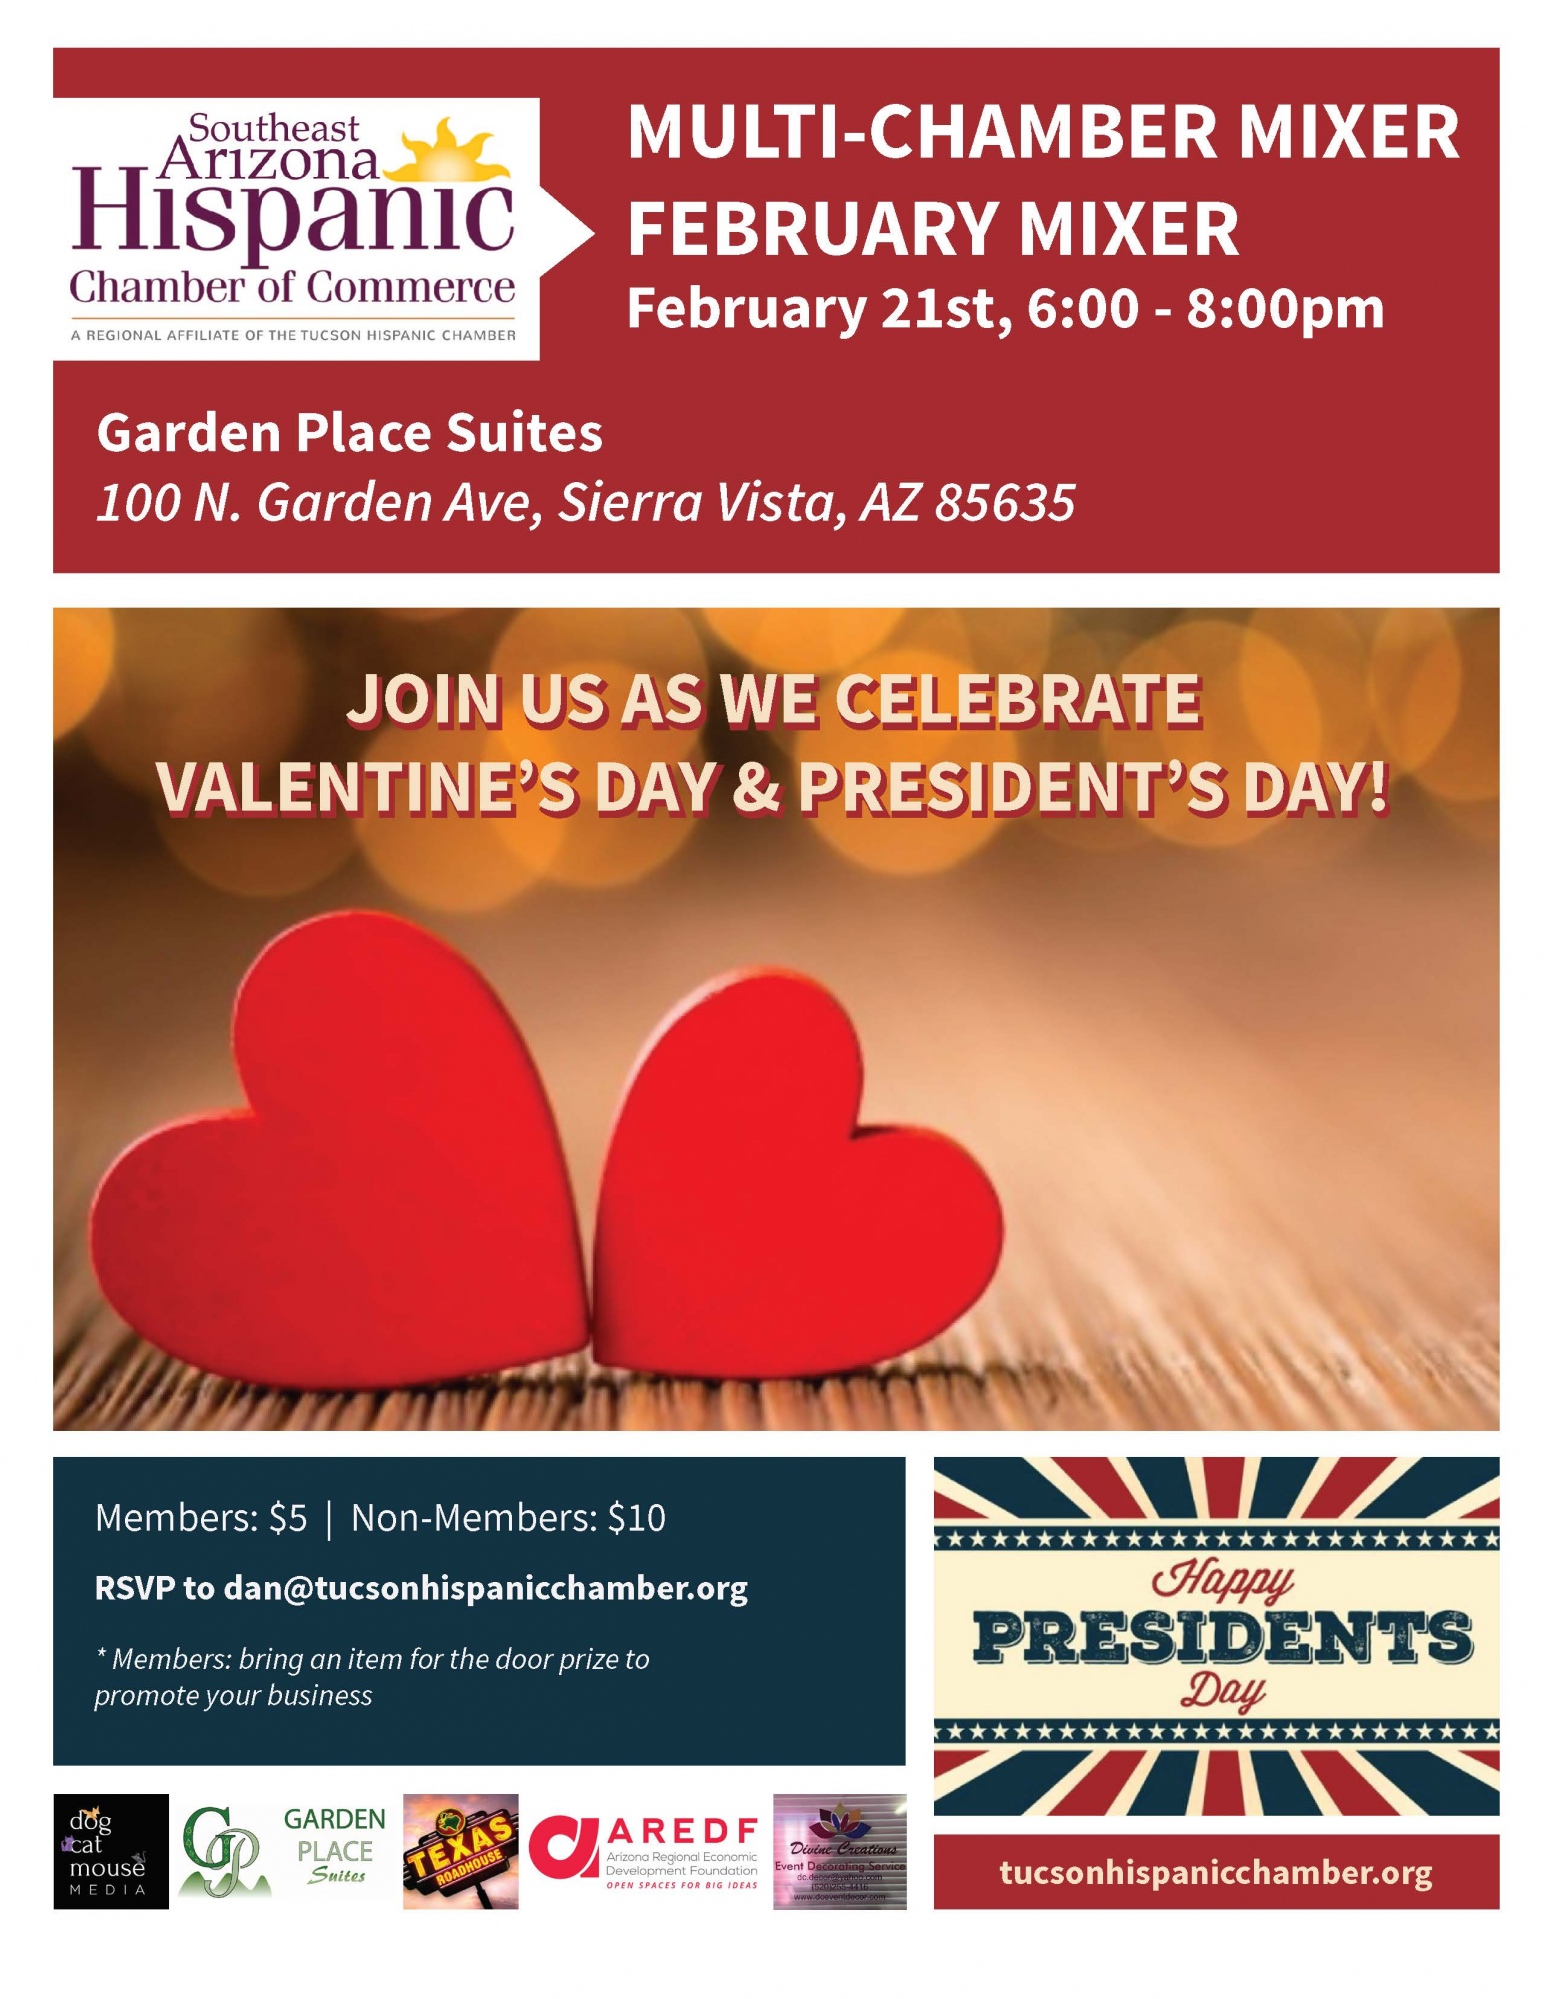 Tucson Hispanic Chamber Of Commerce Event Information